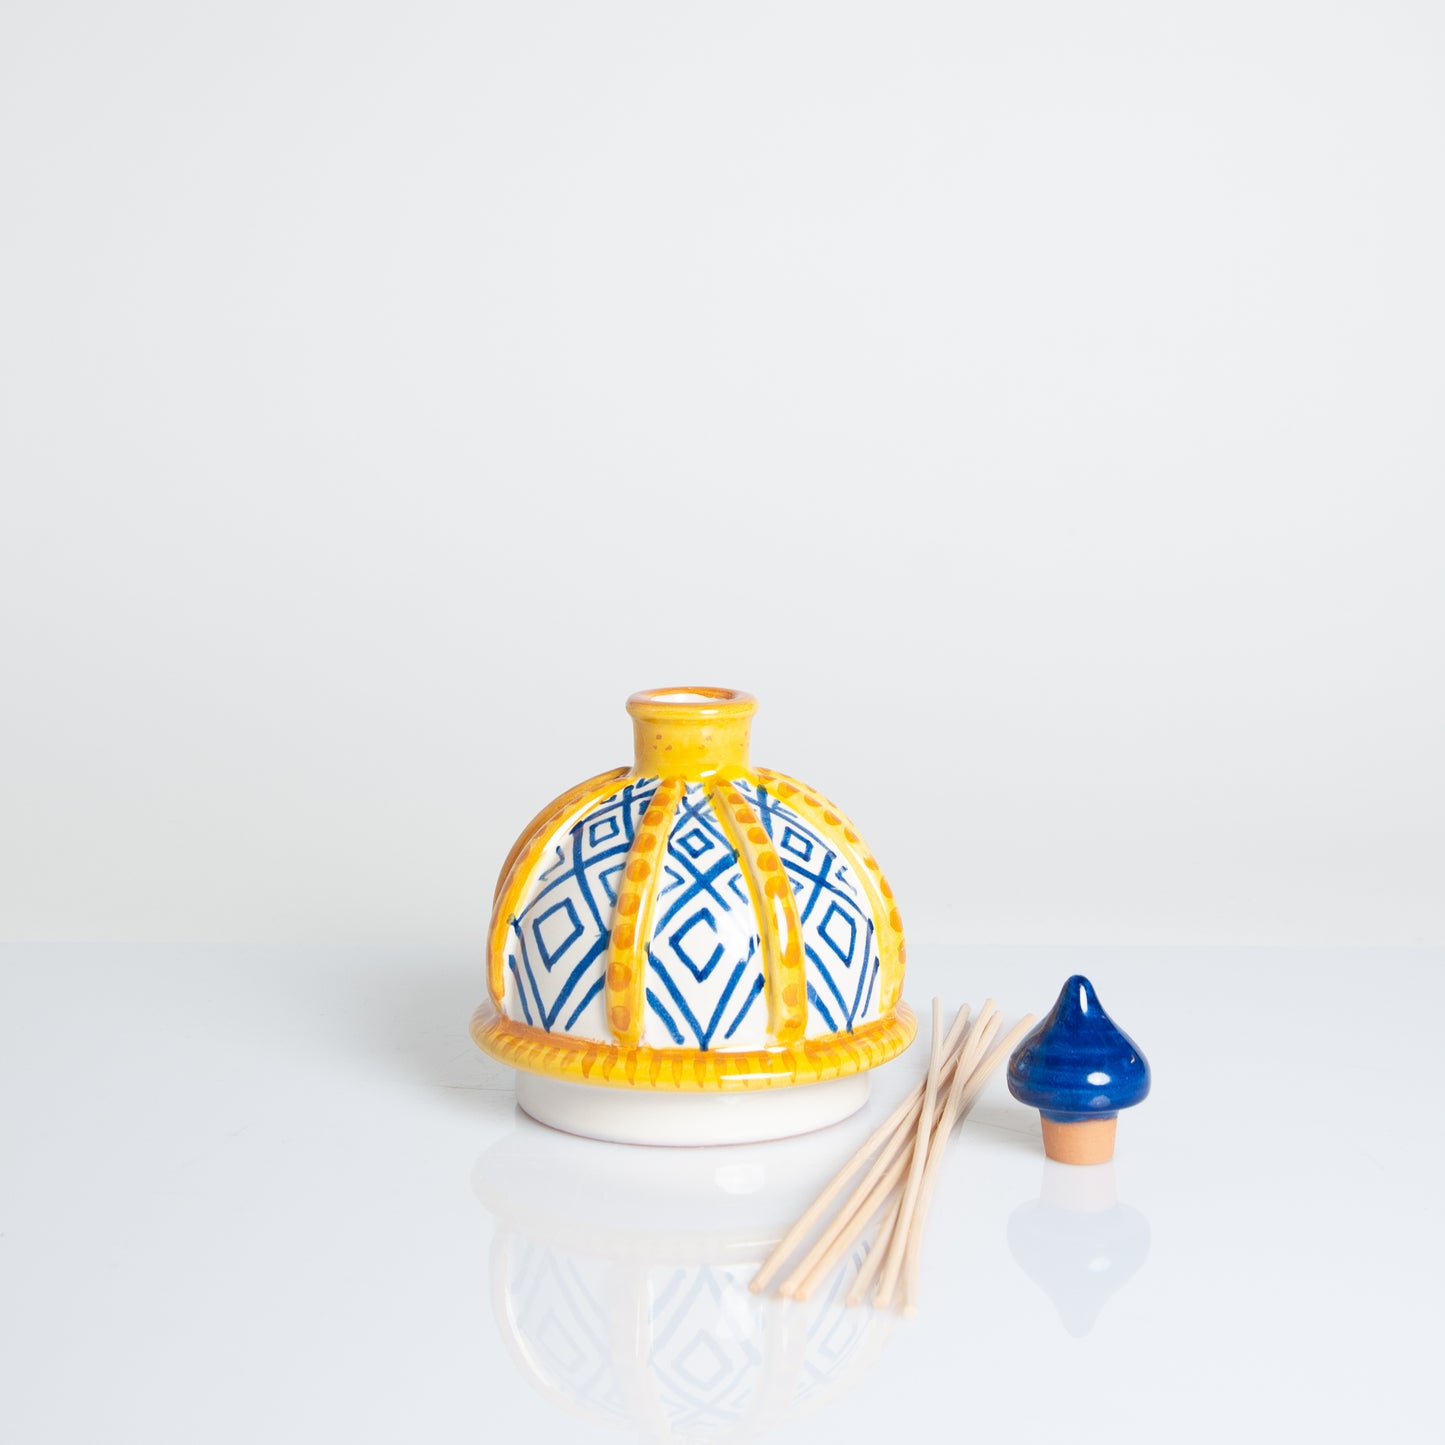 Yellow/blue perfumer dome